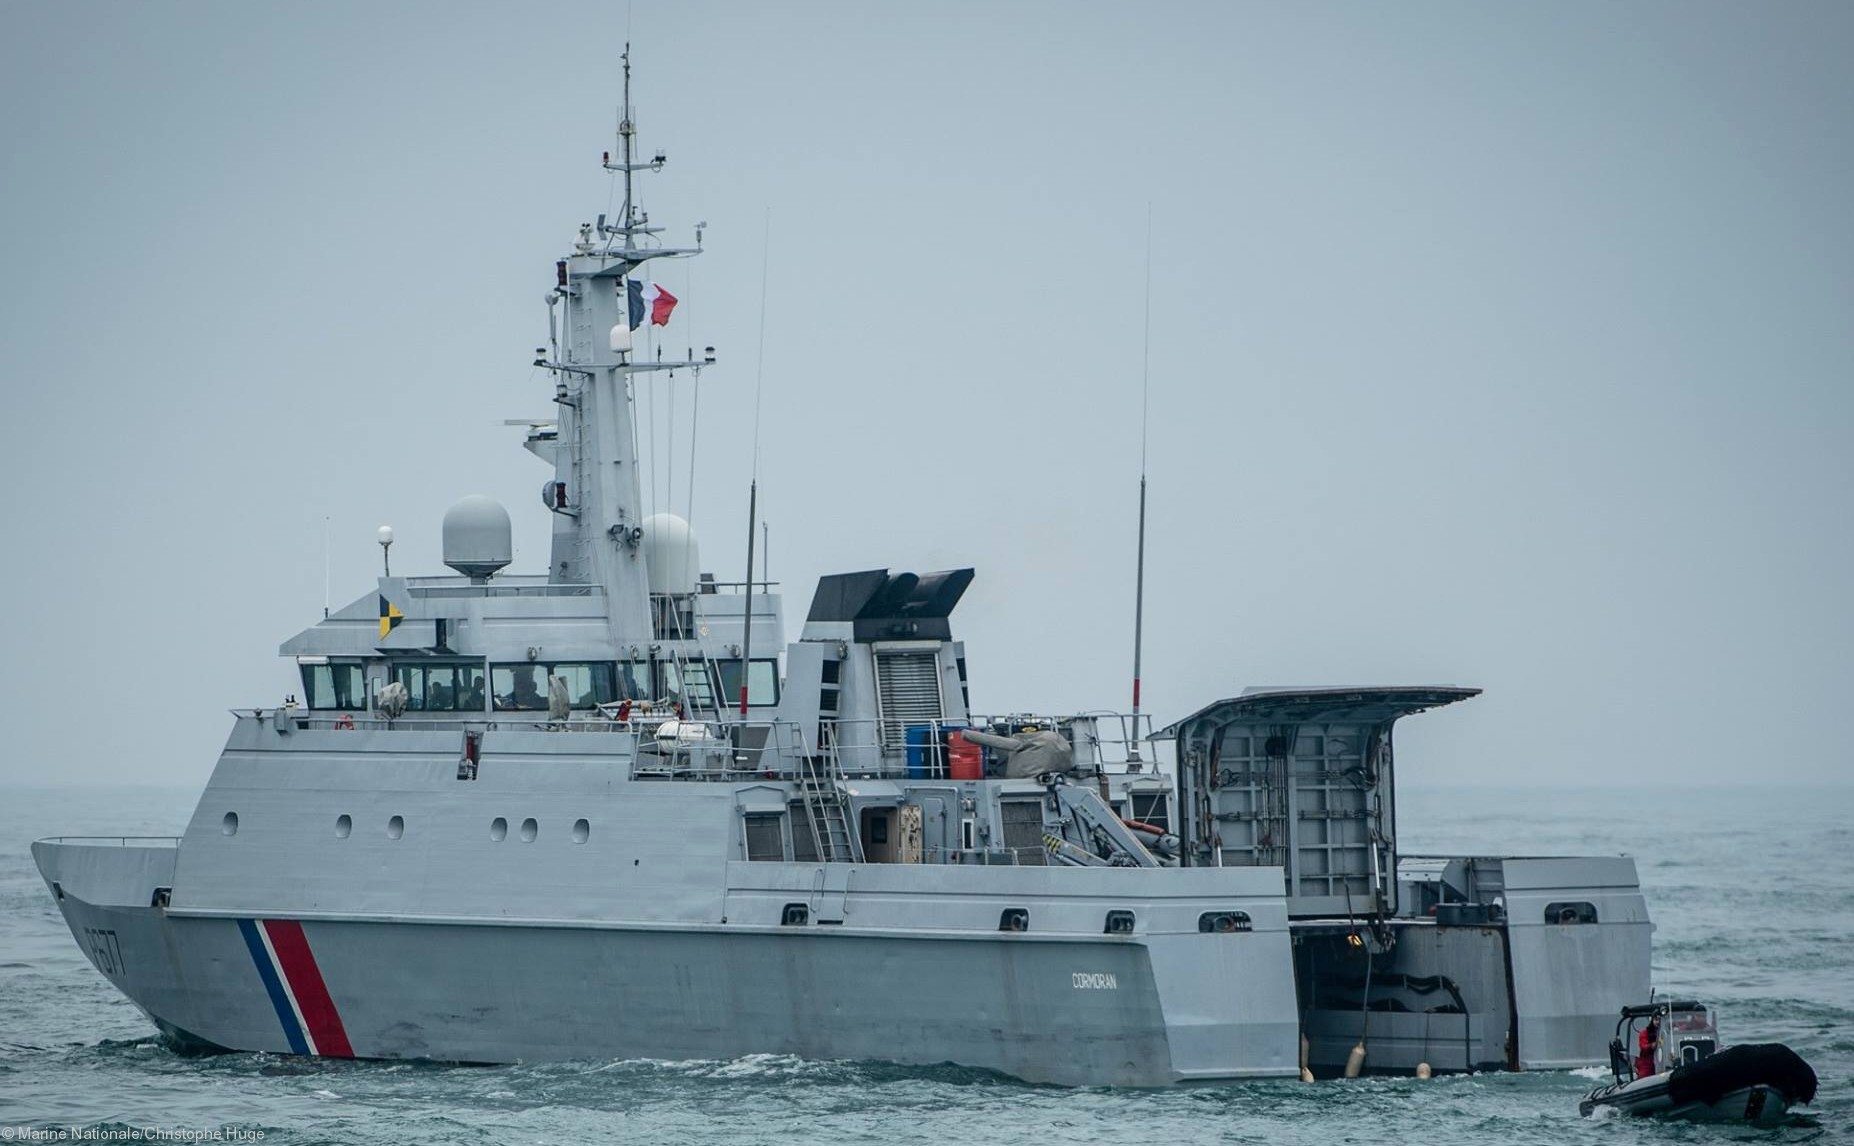 p-677 cormoran flamant class offshore patrol vessel opv french navy patrouilleur marine nationale 02